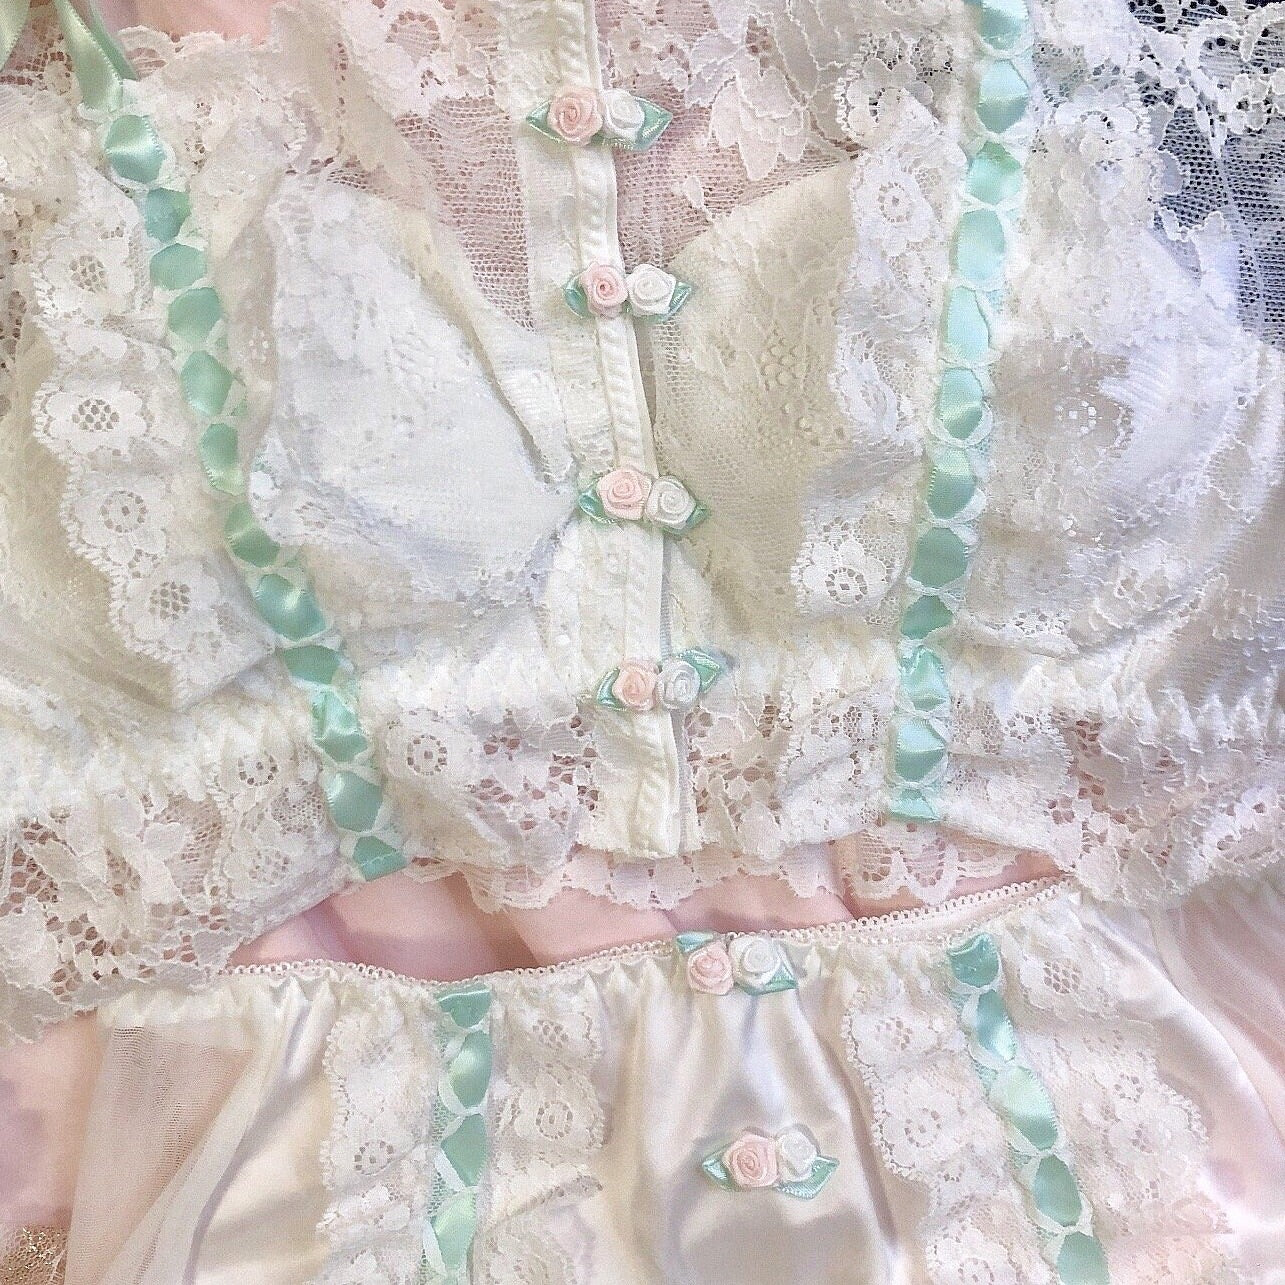 Roses & Lace 2-piece Lace Kawaii Princess Nymphet Lolita Lingerie Set 